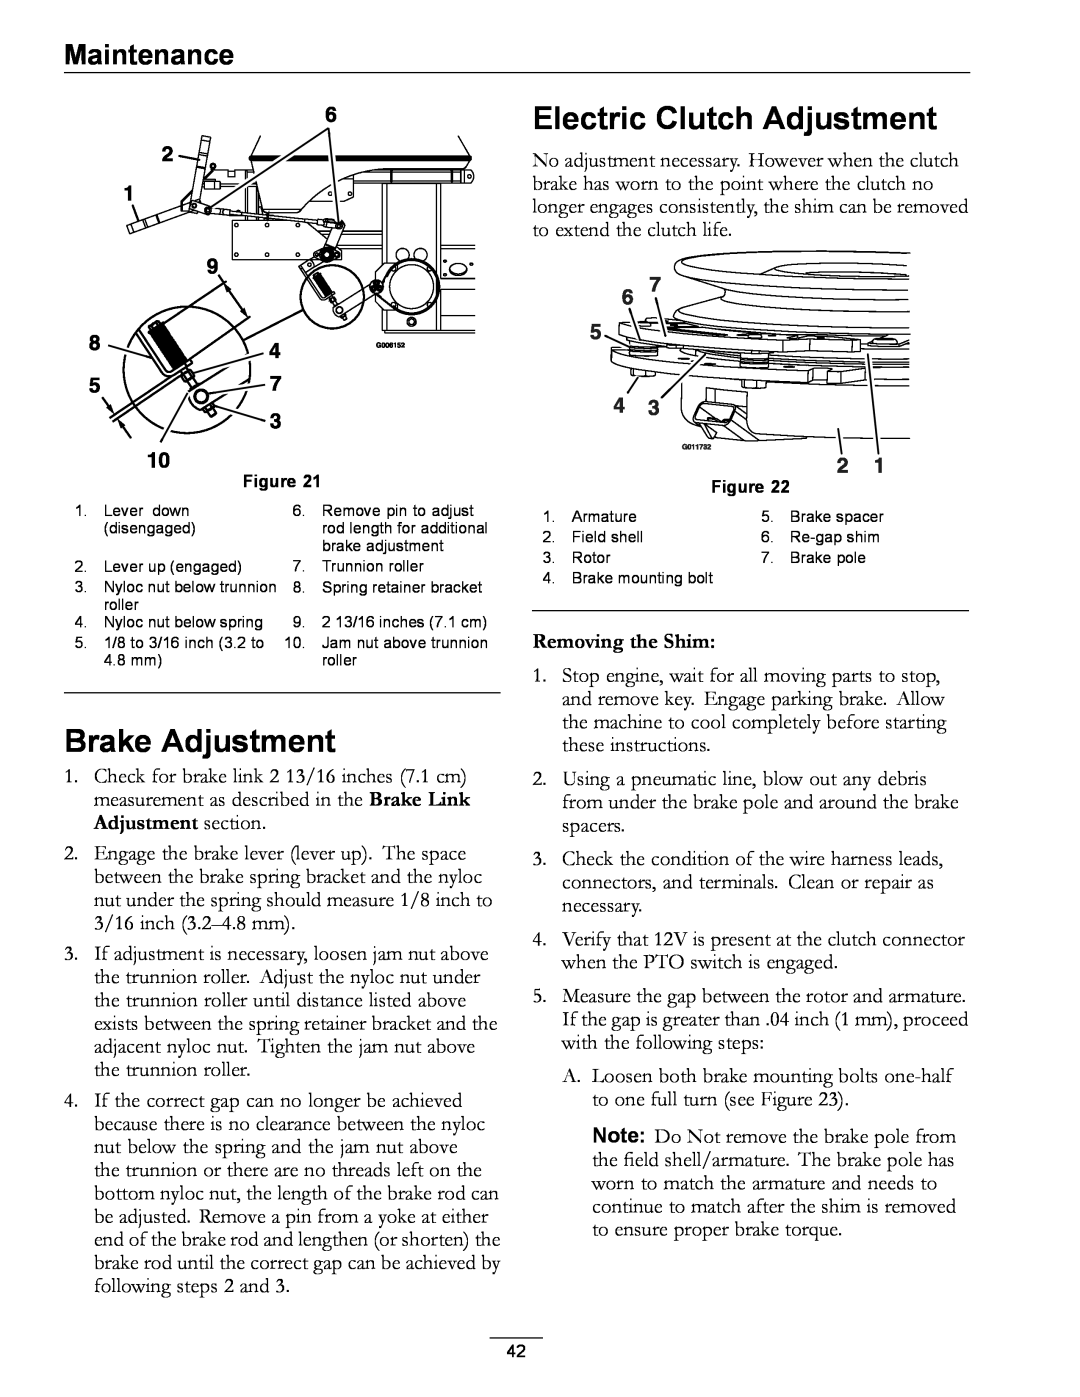 Exmark 920 manual Electric Clutch Adjustment, Brake Adjustment, Removing the Shim, Maintenance 